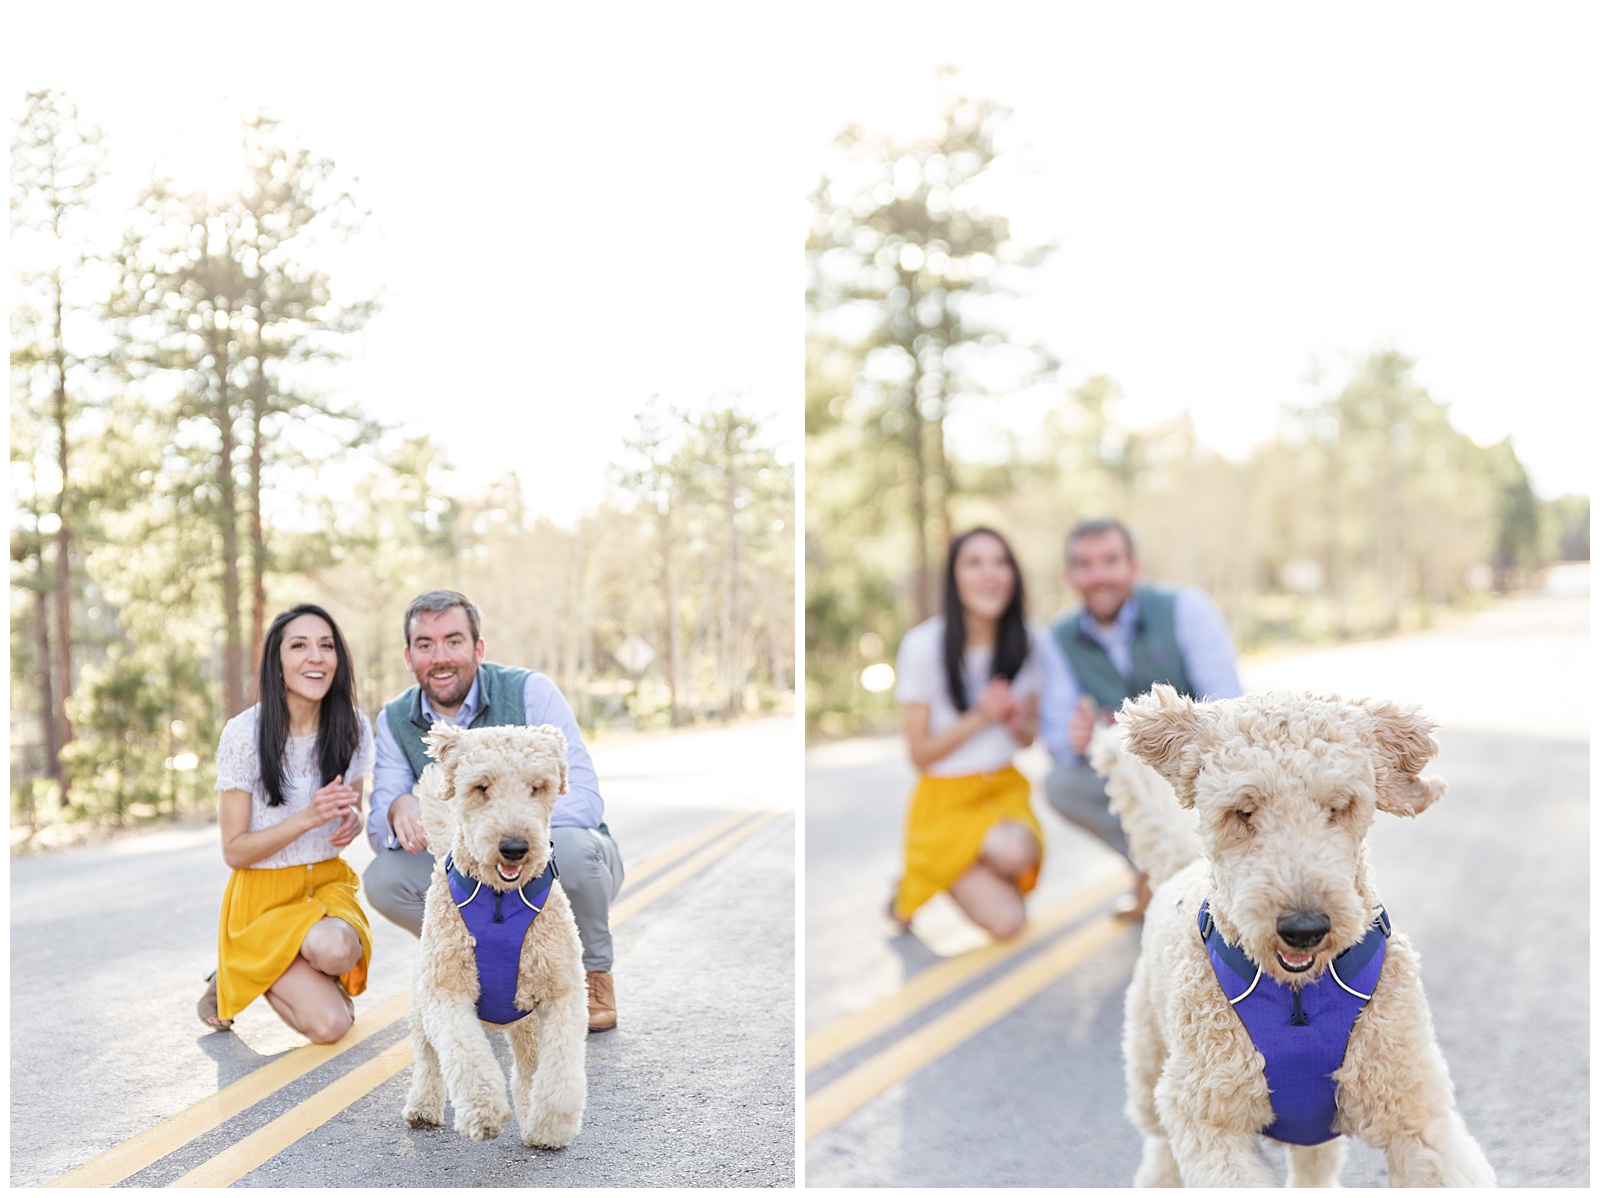 Planning a wedding dog engagement photo